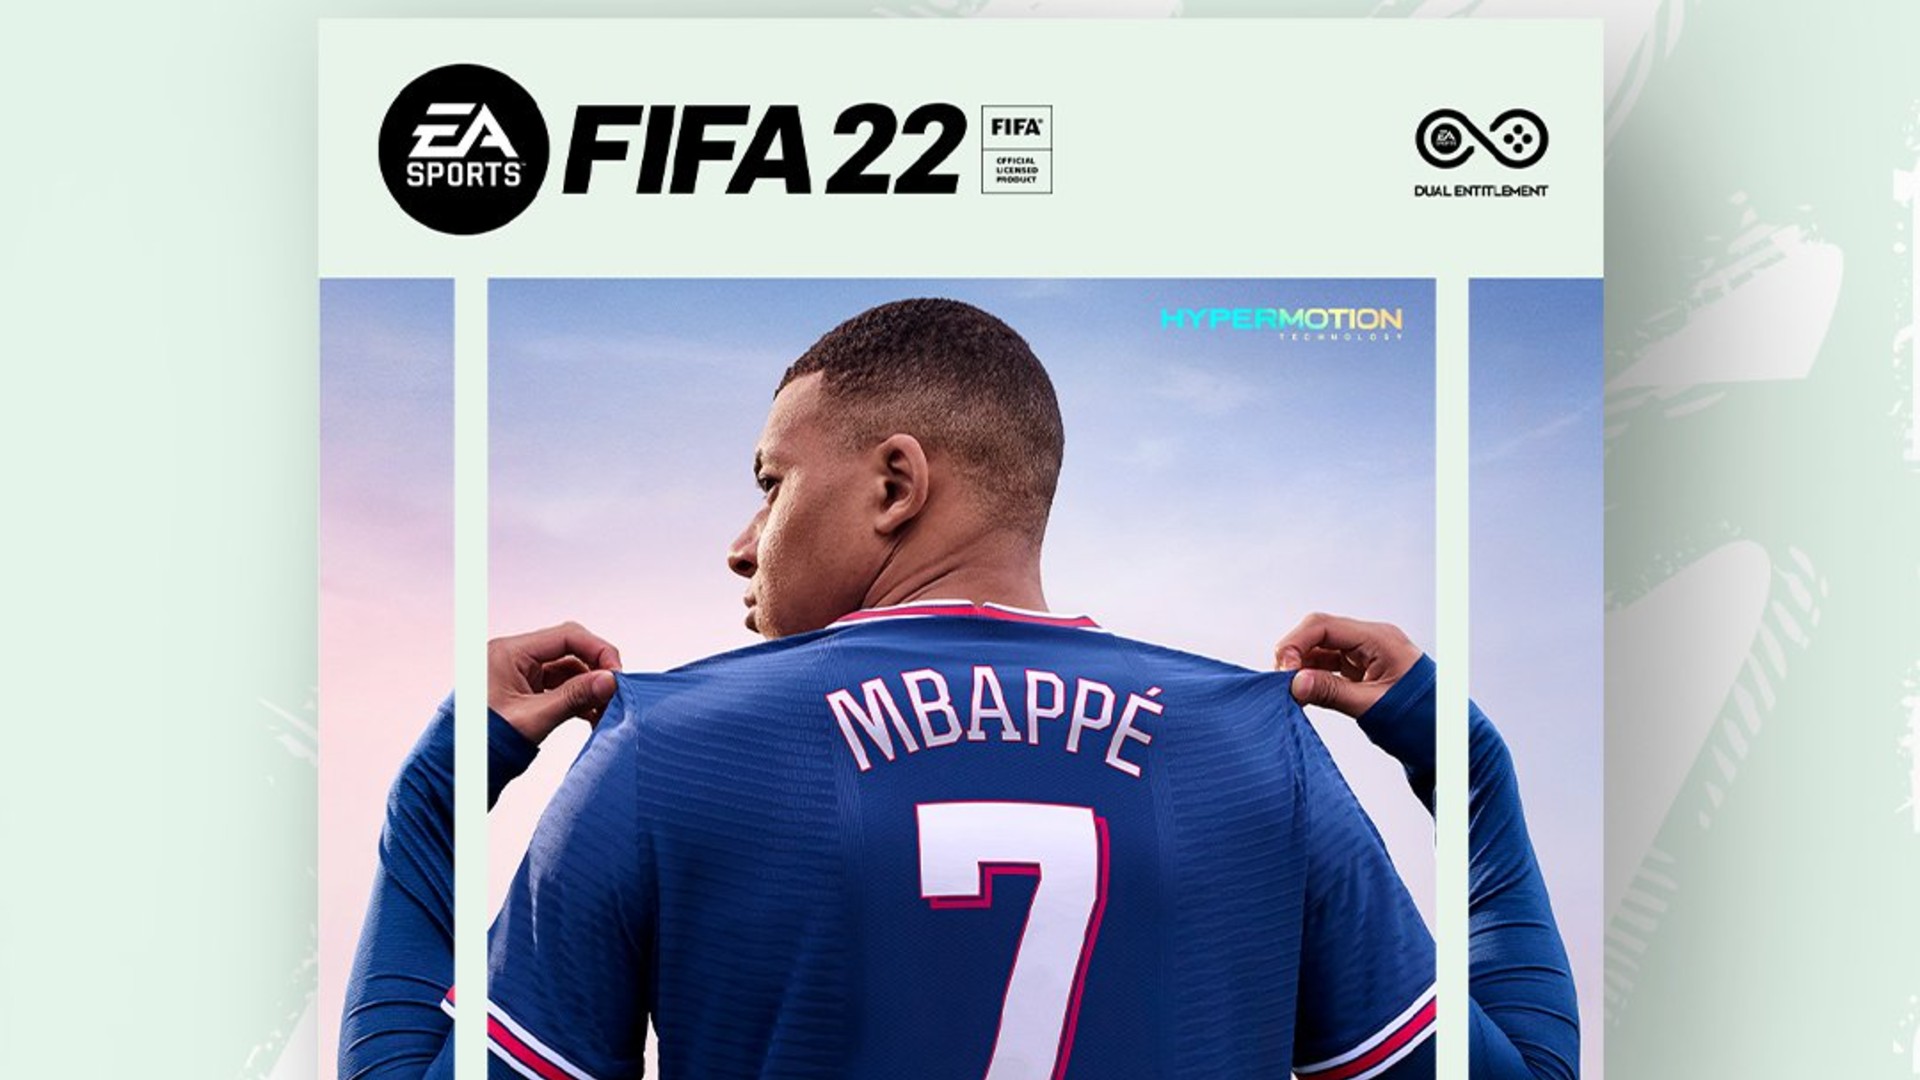 FIFA 22 Wallpaper 4K, Kylian Mbappé, PC Games